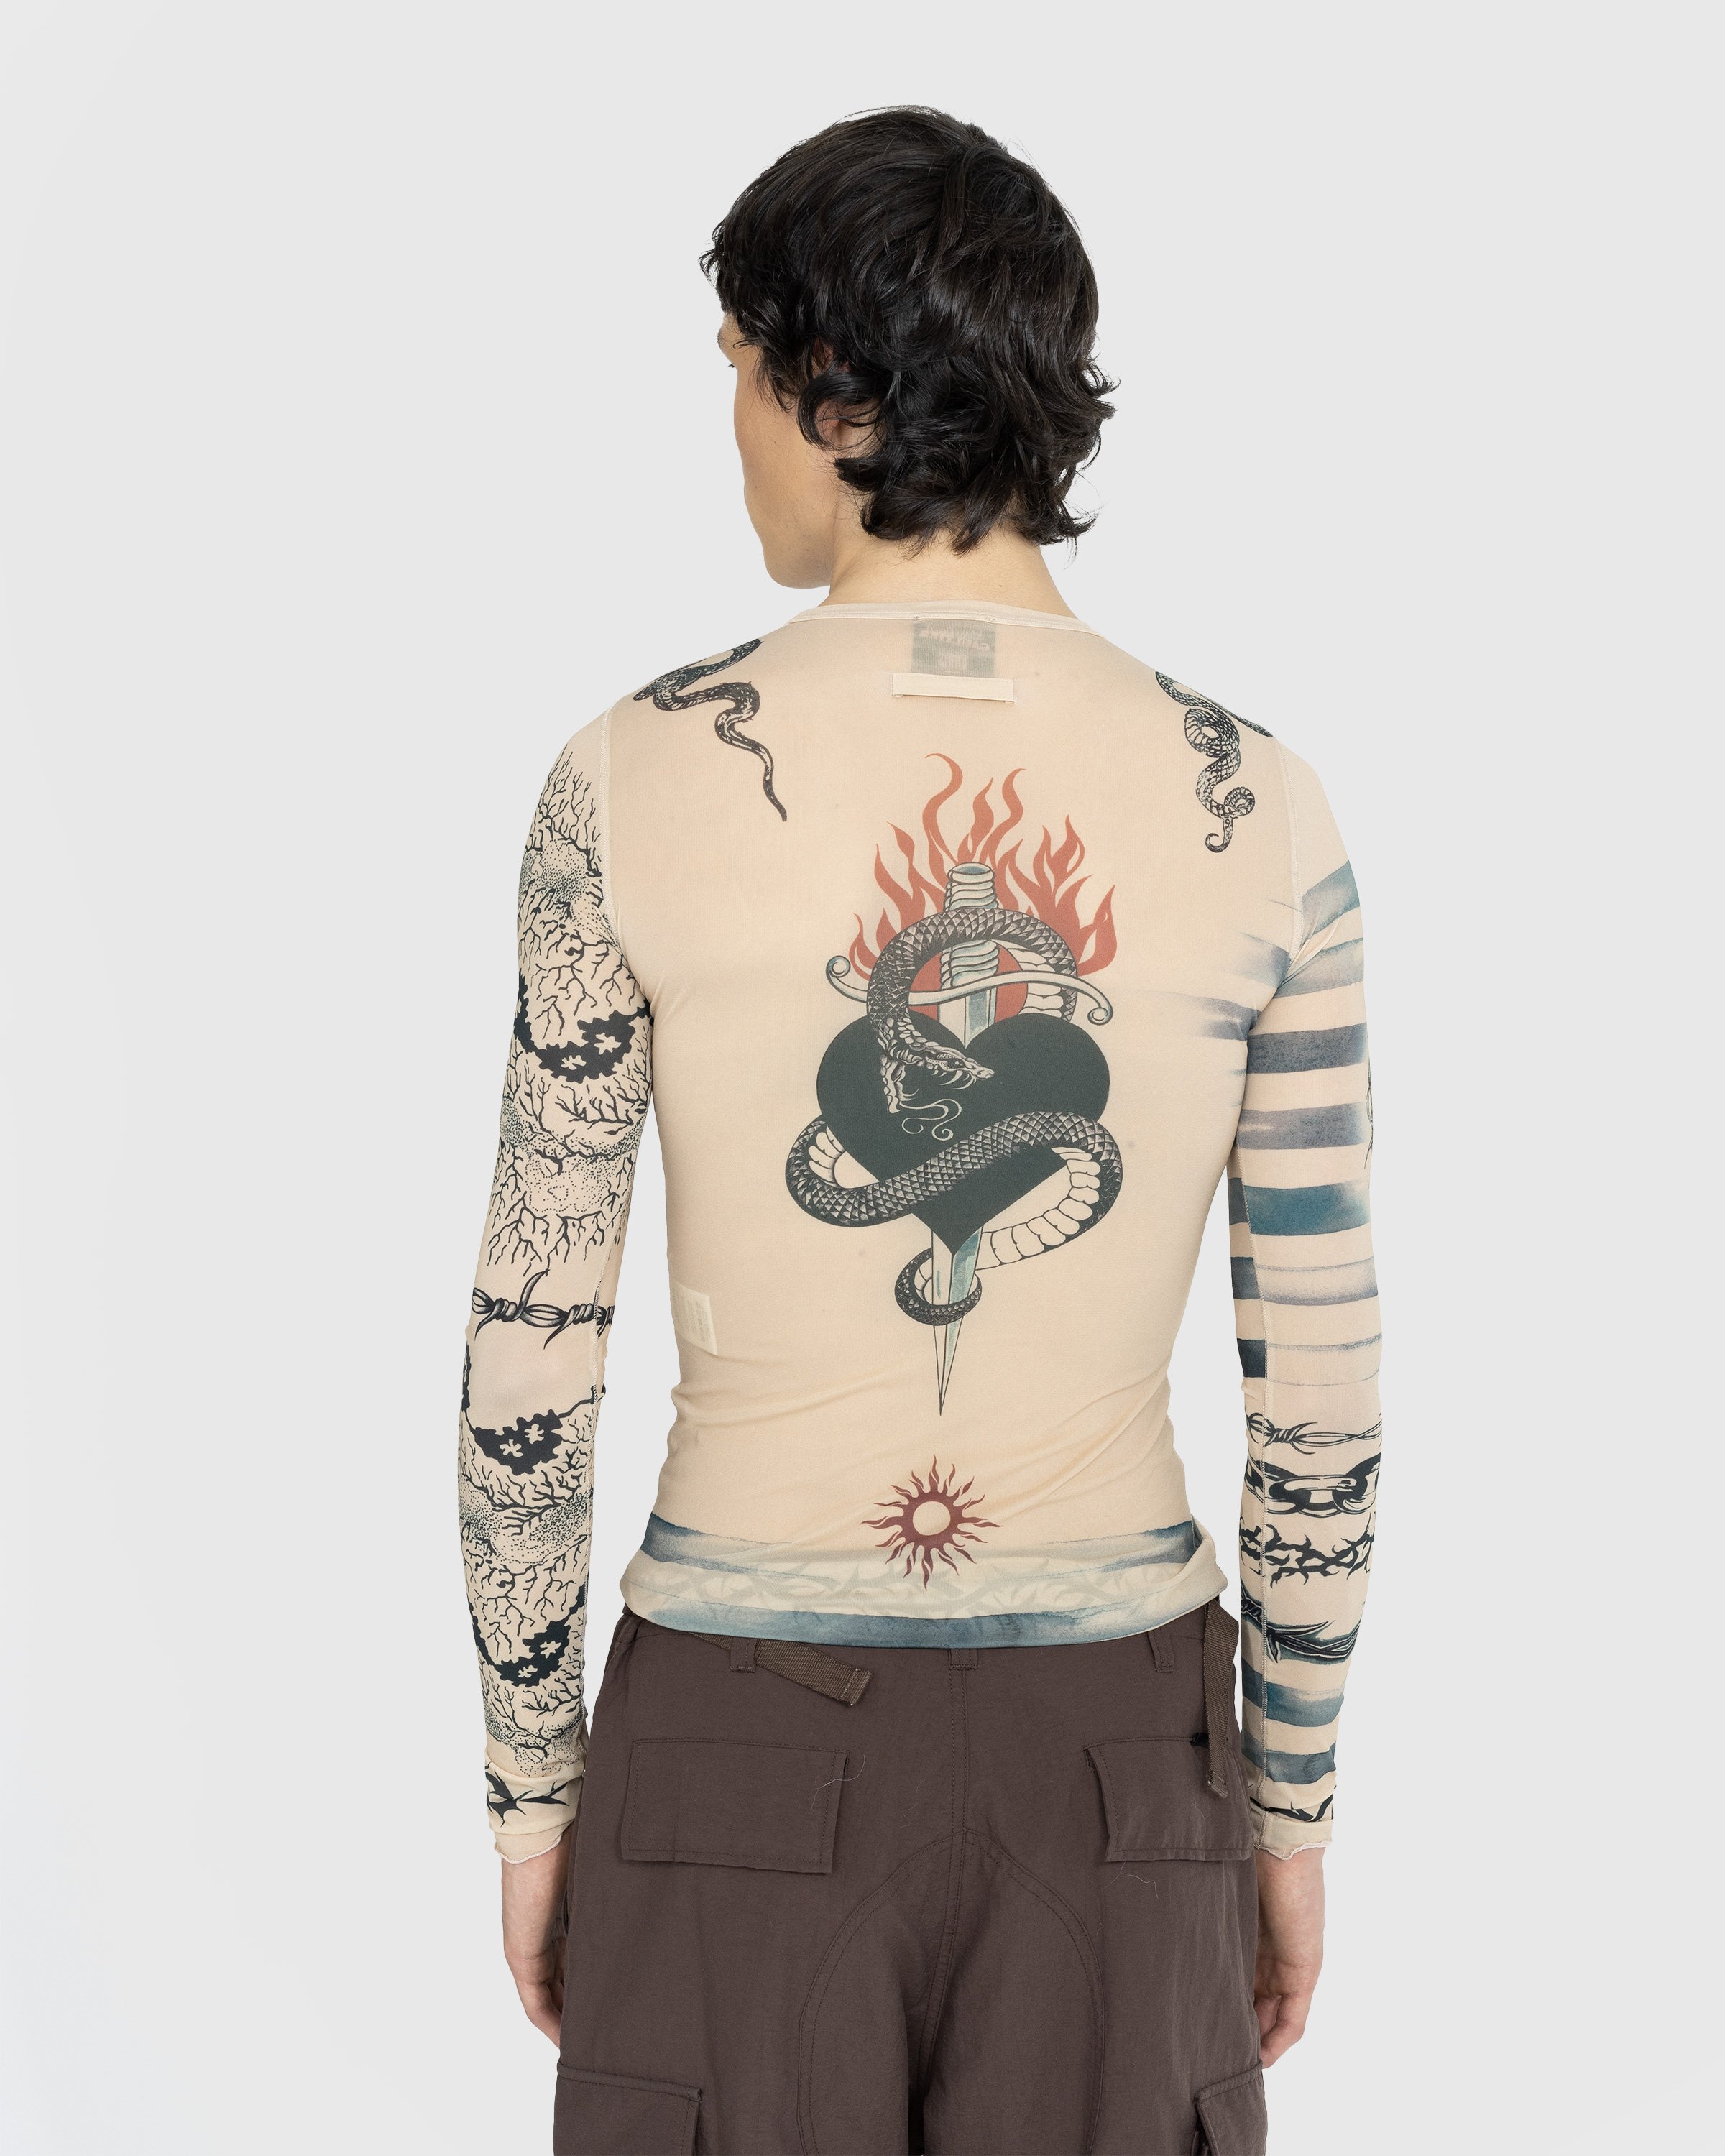 Jean Paul Gaultier - Trompe l'oeil Tattoo Longsleeve Top Nude/Grey/Black - Clothing - Beige - Image 3